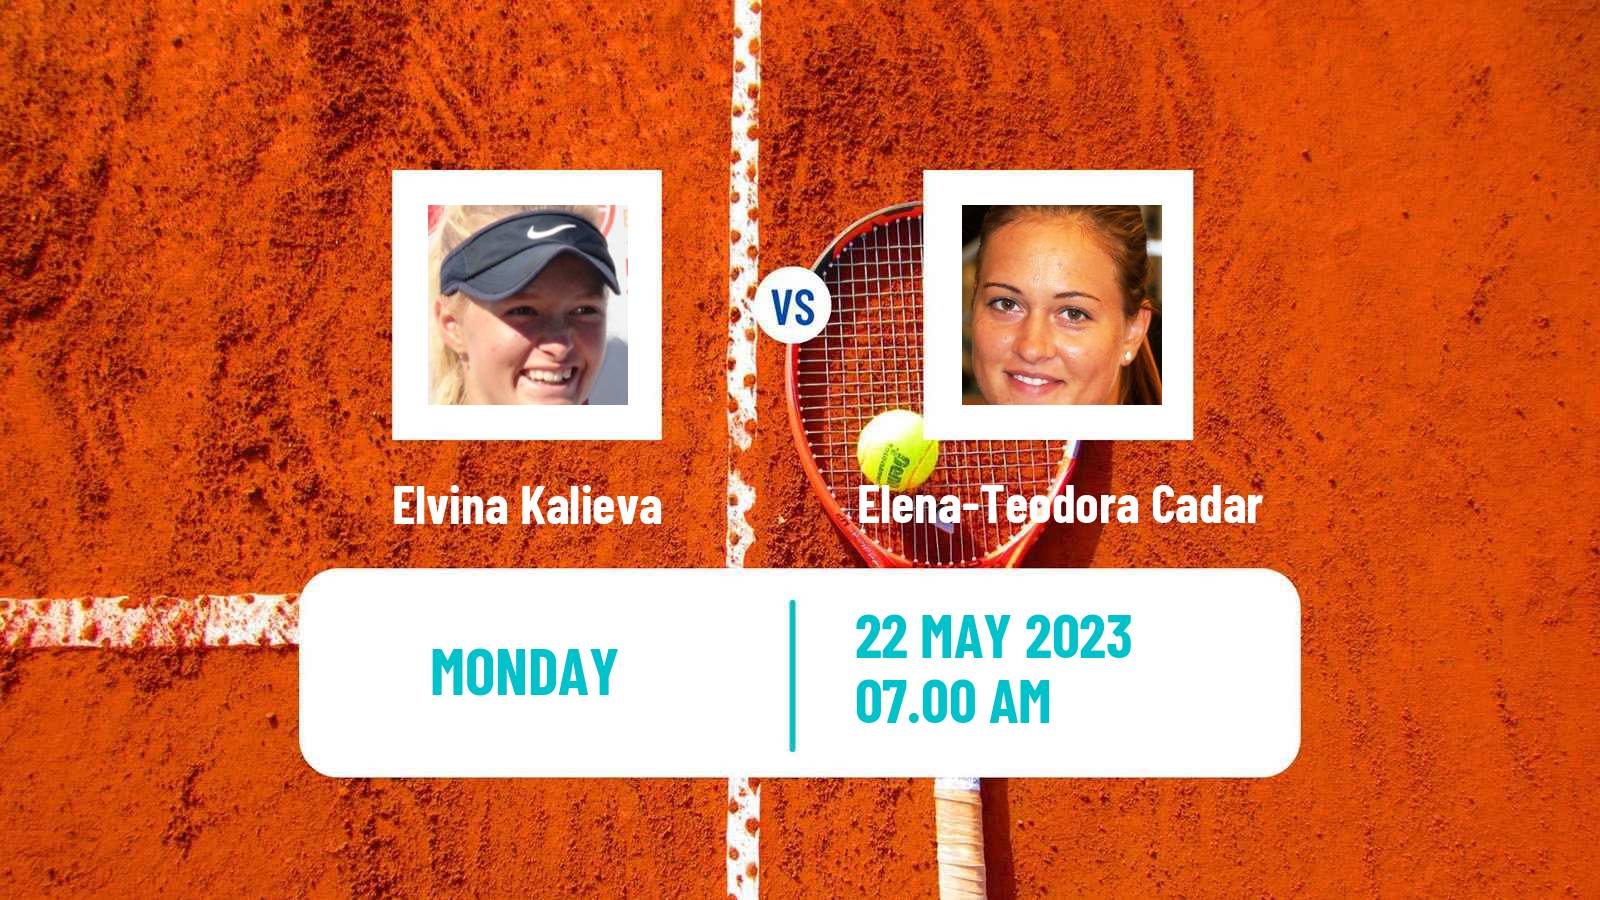 Tennis ITF W25 Warmbad Villach Women Elvina Kalieva - Elena-Teodora Cadar